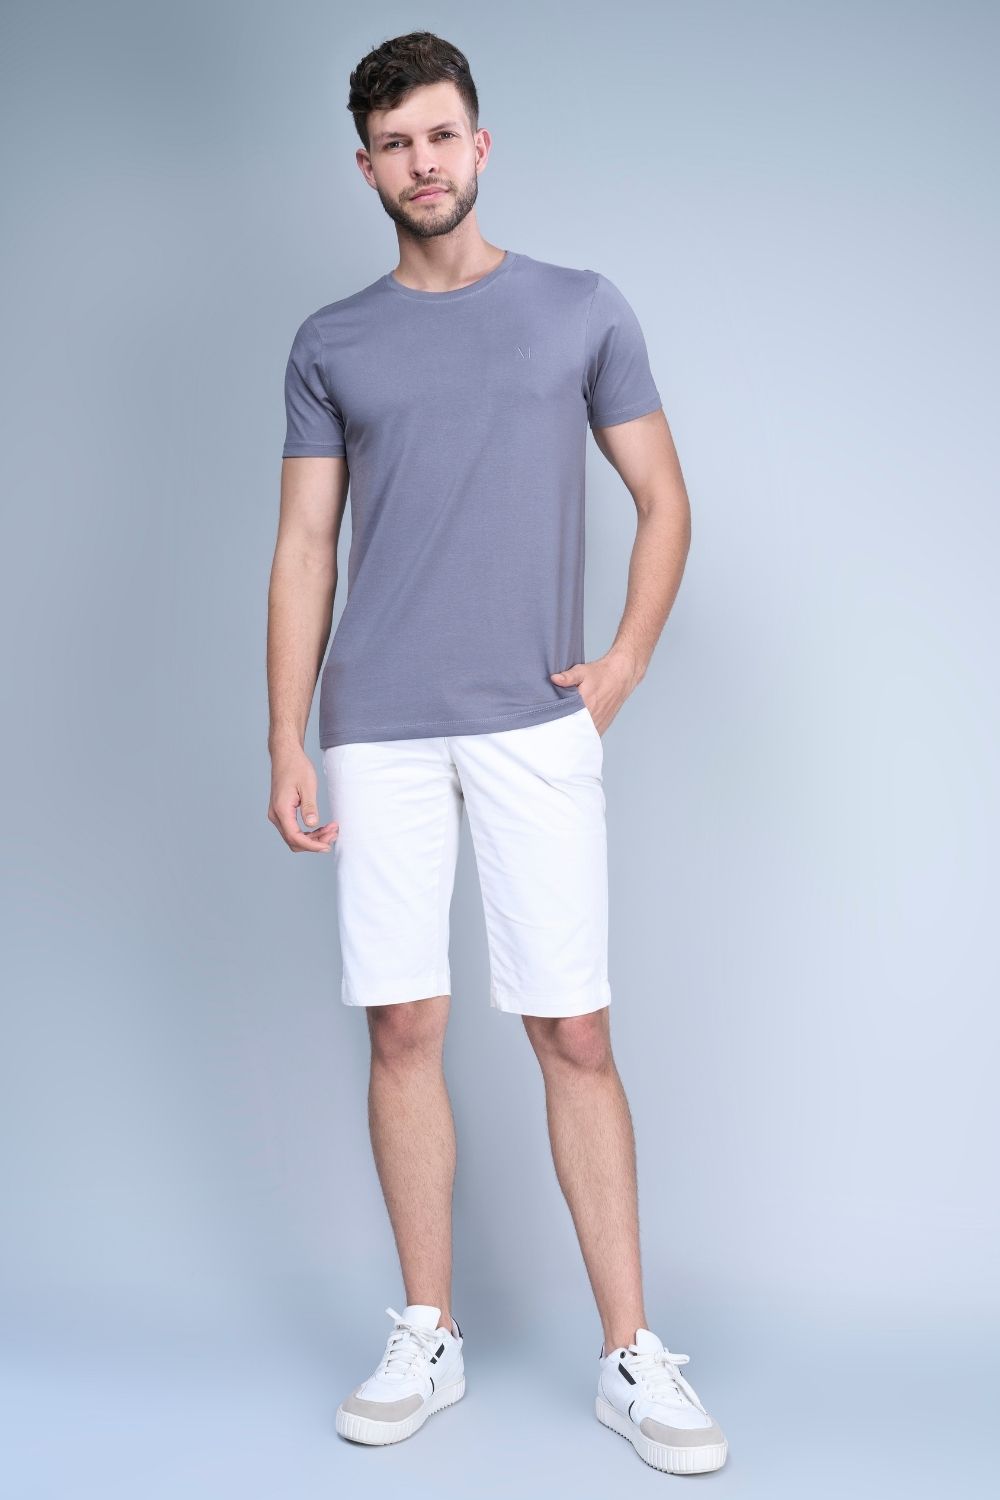 Maxzone Clothing Vista Blue - Solid t-shirt